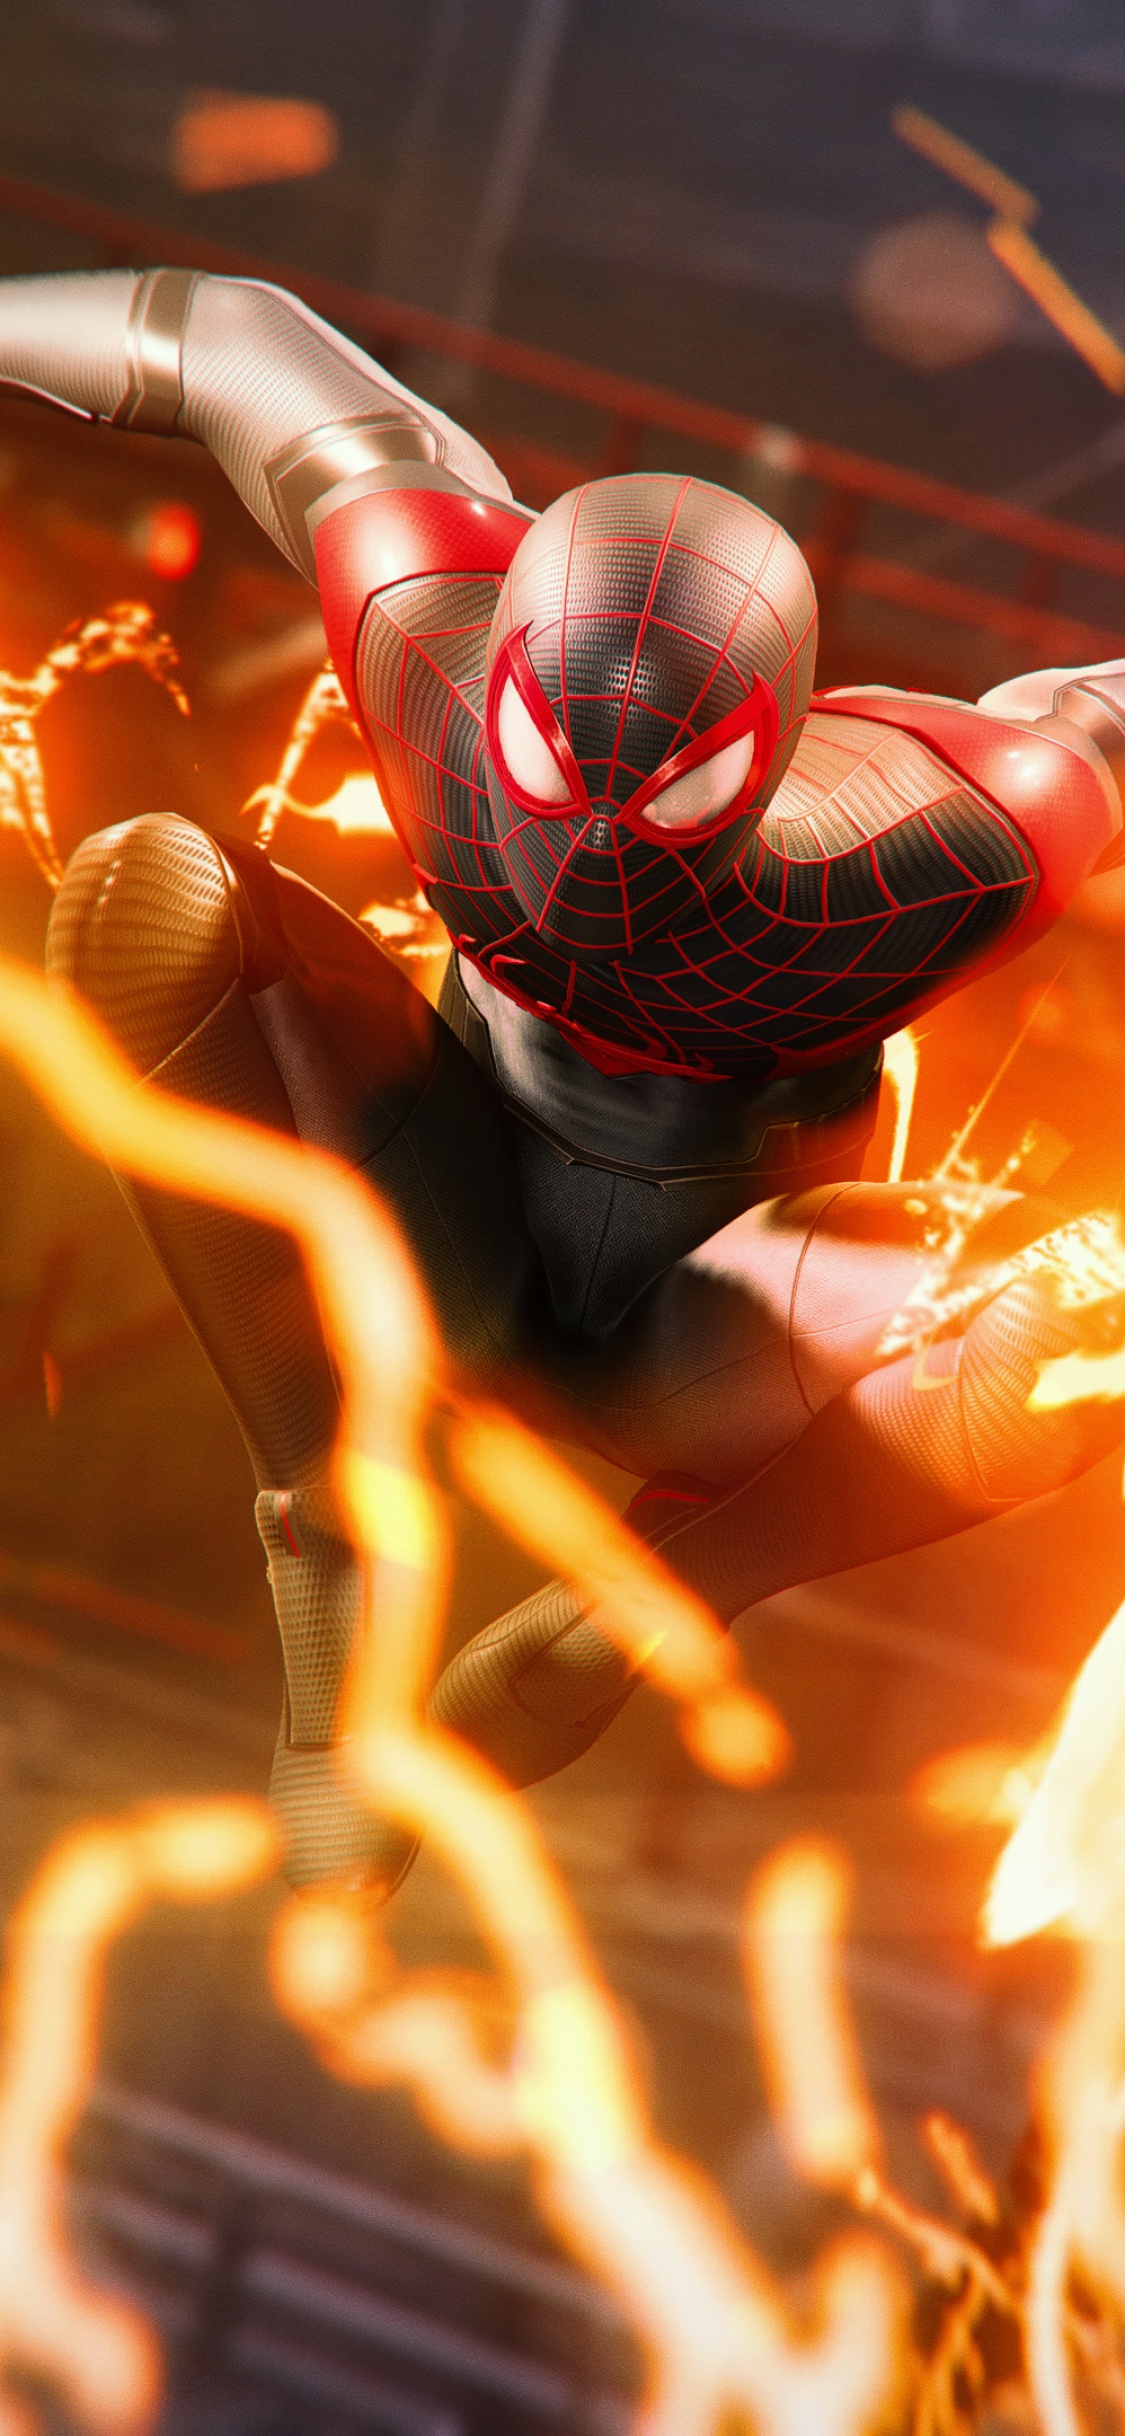 Marvel's Spider-Man: Miles Morales Wallpaper 4K, Action, Gameplay, PlayStation 5, 2020